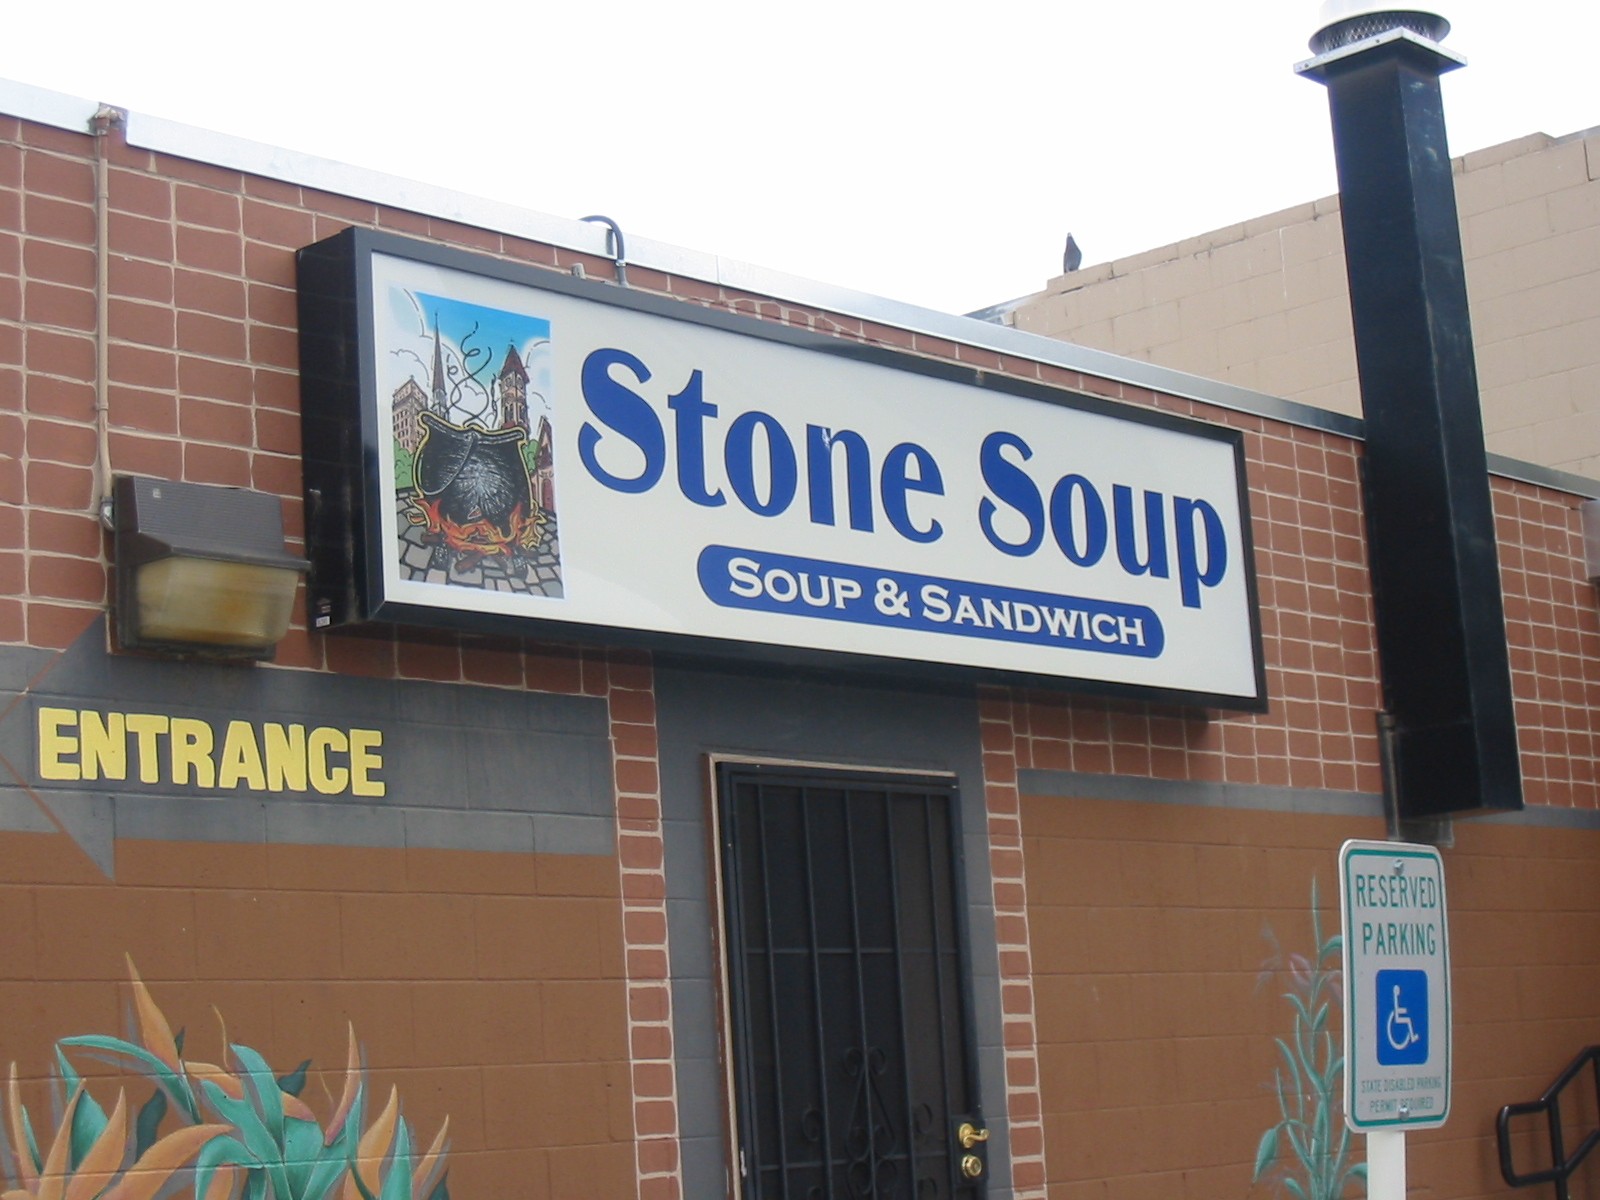 [Stone+Soup+back+of+store+june+2007.jpg]